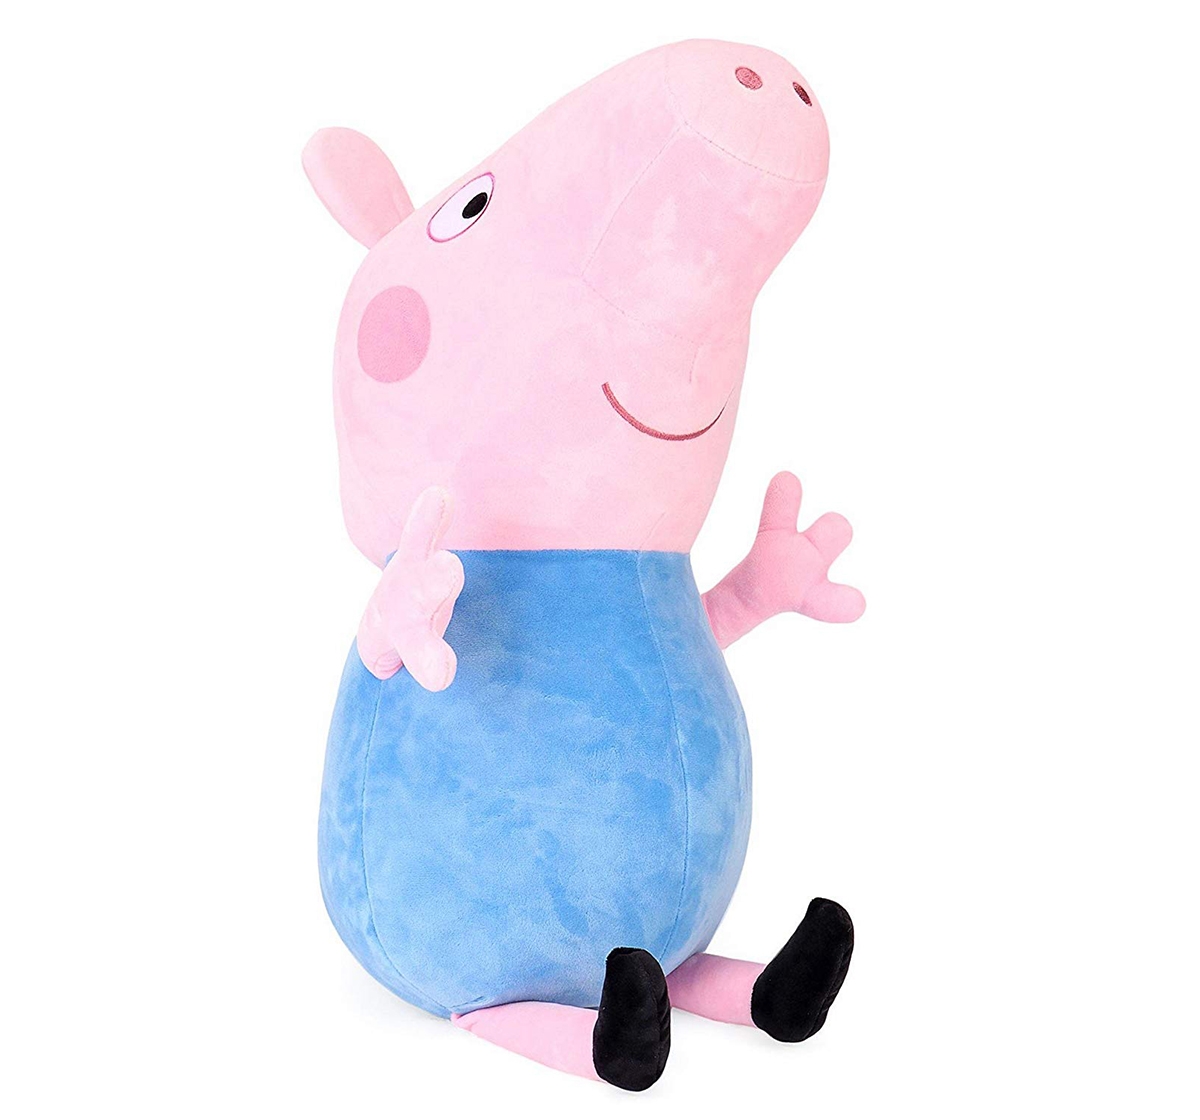 Peppa Pig | Peppa George Pig  Multi Color 46 Cm Soft Toy for Kids age 0M+ (Blue)